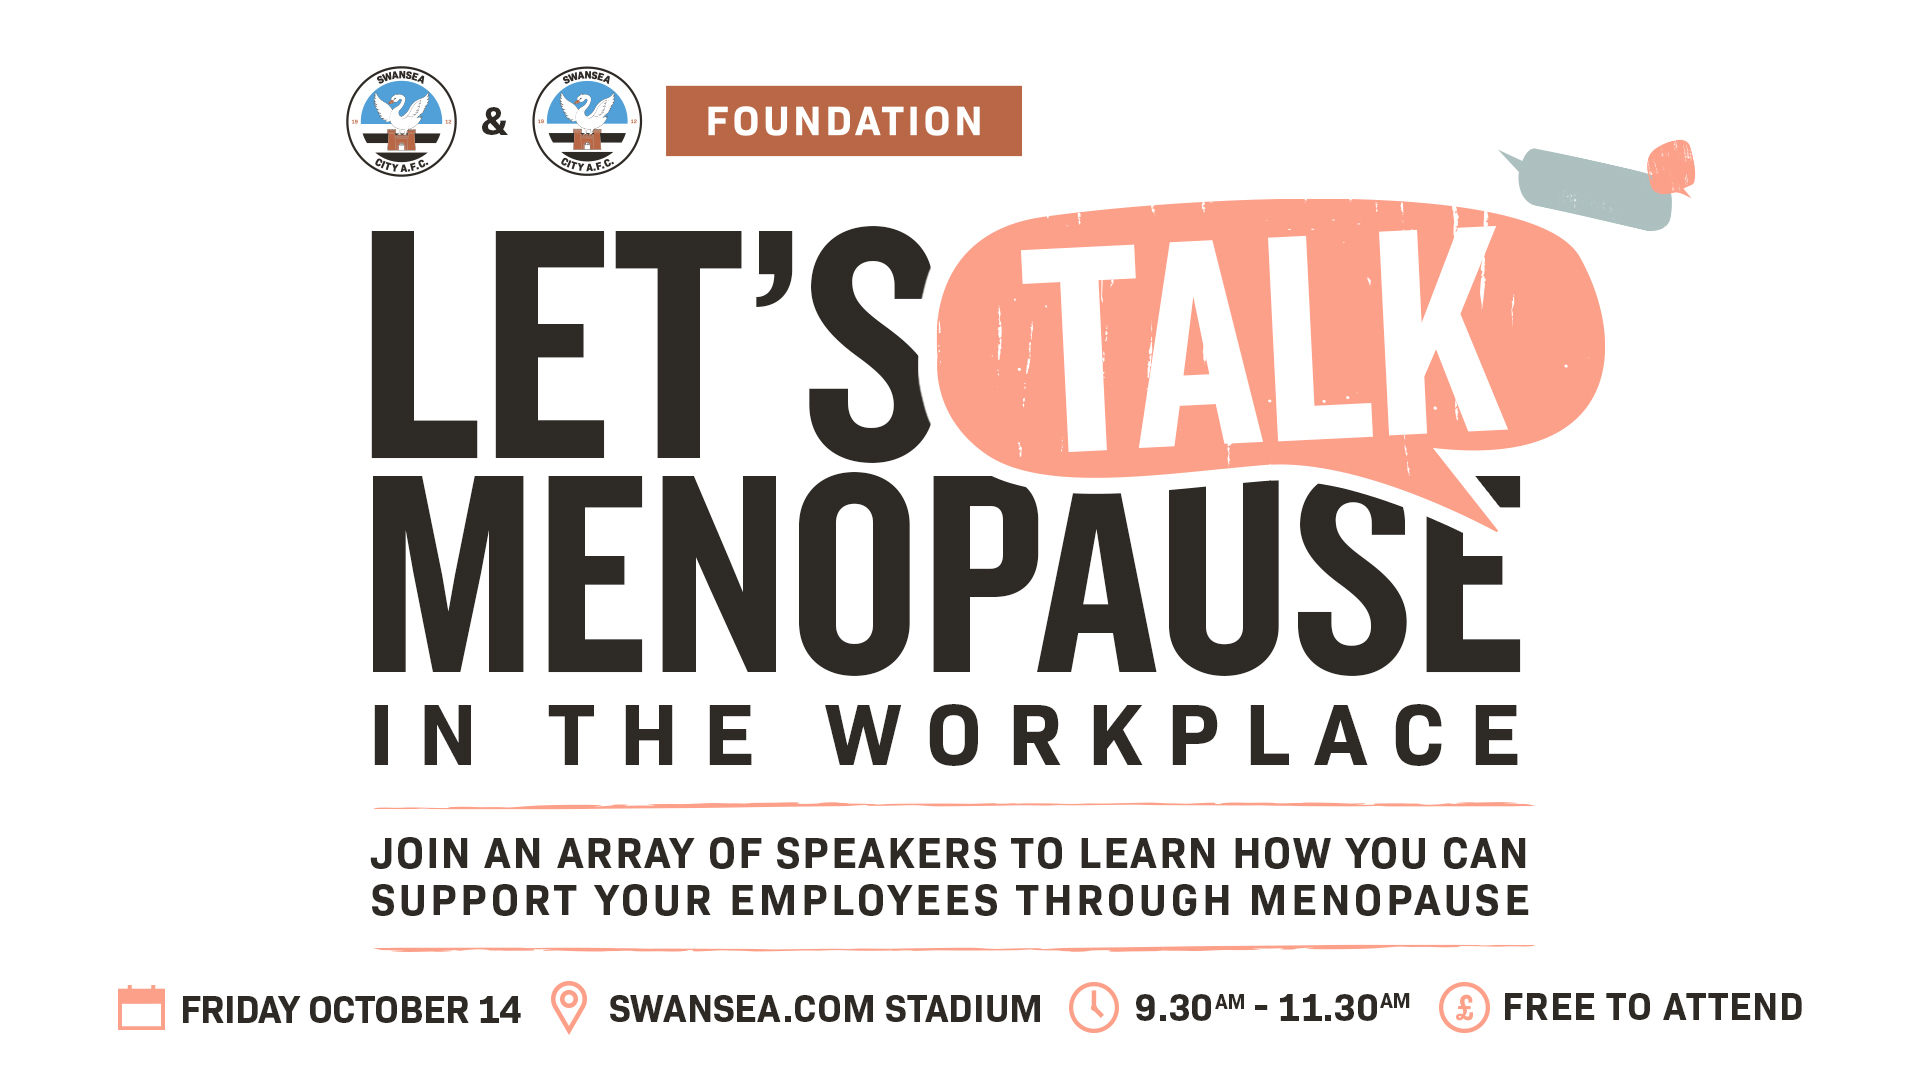 Speakers confirmed for Let's Talk Menopause event at Swansea.com Stadium | Swansea